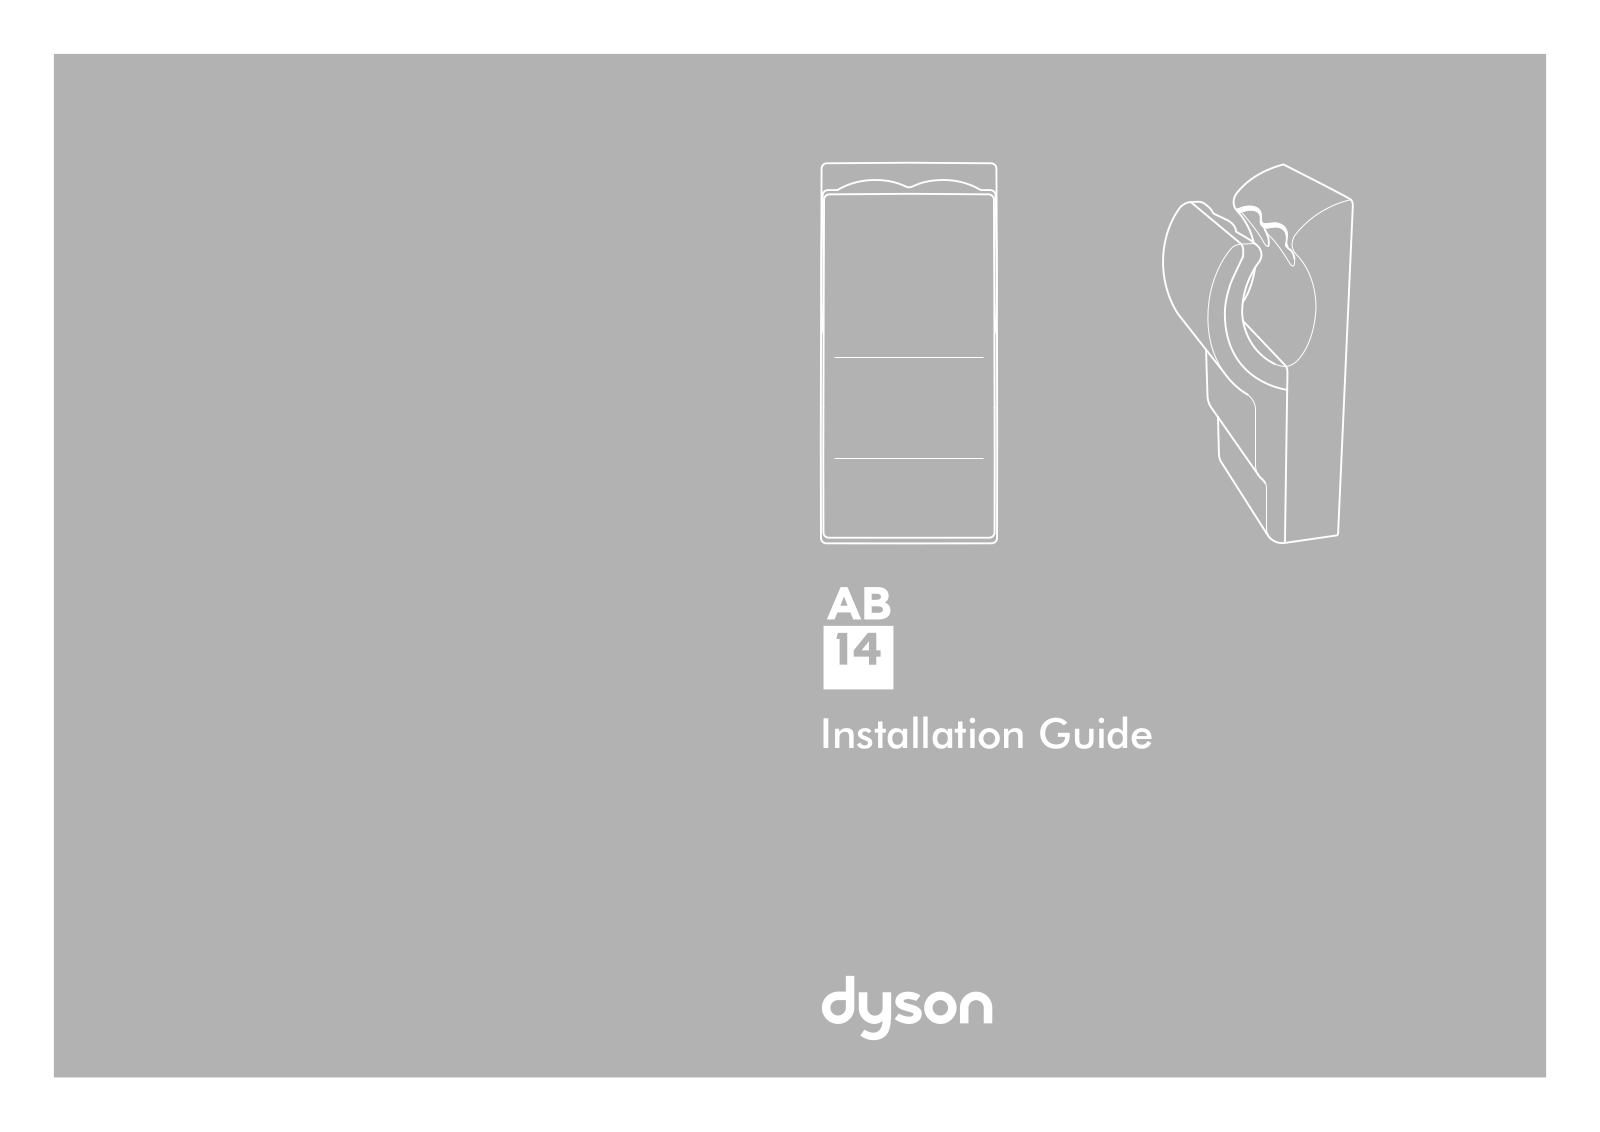 Dyson Airblade dB Installation Guide